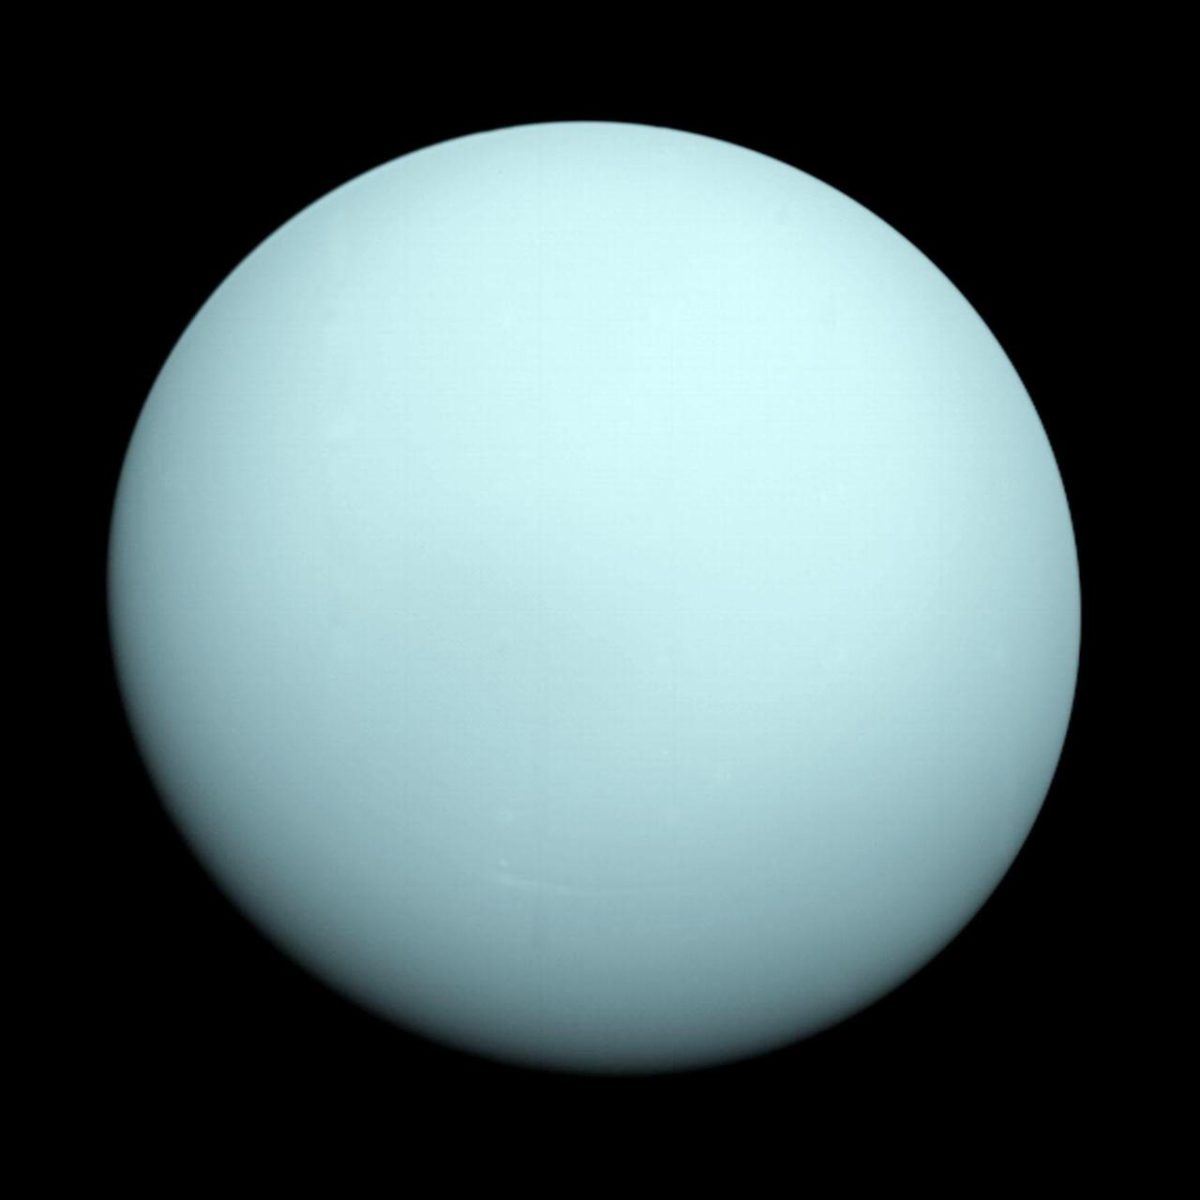 Uranus pictured in 1986 by Voyager 2. NASA/JPL - Caltech Voyager 2